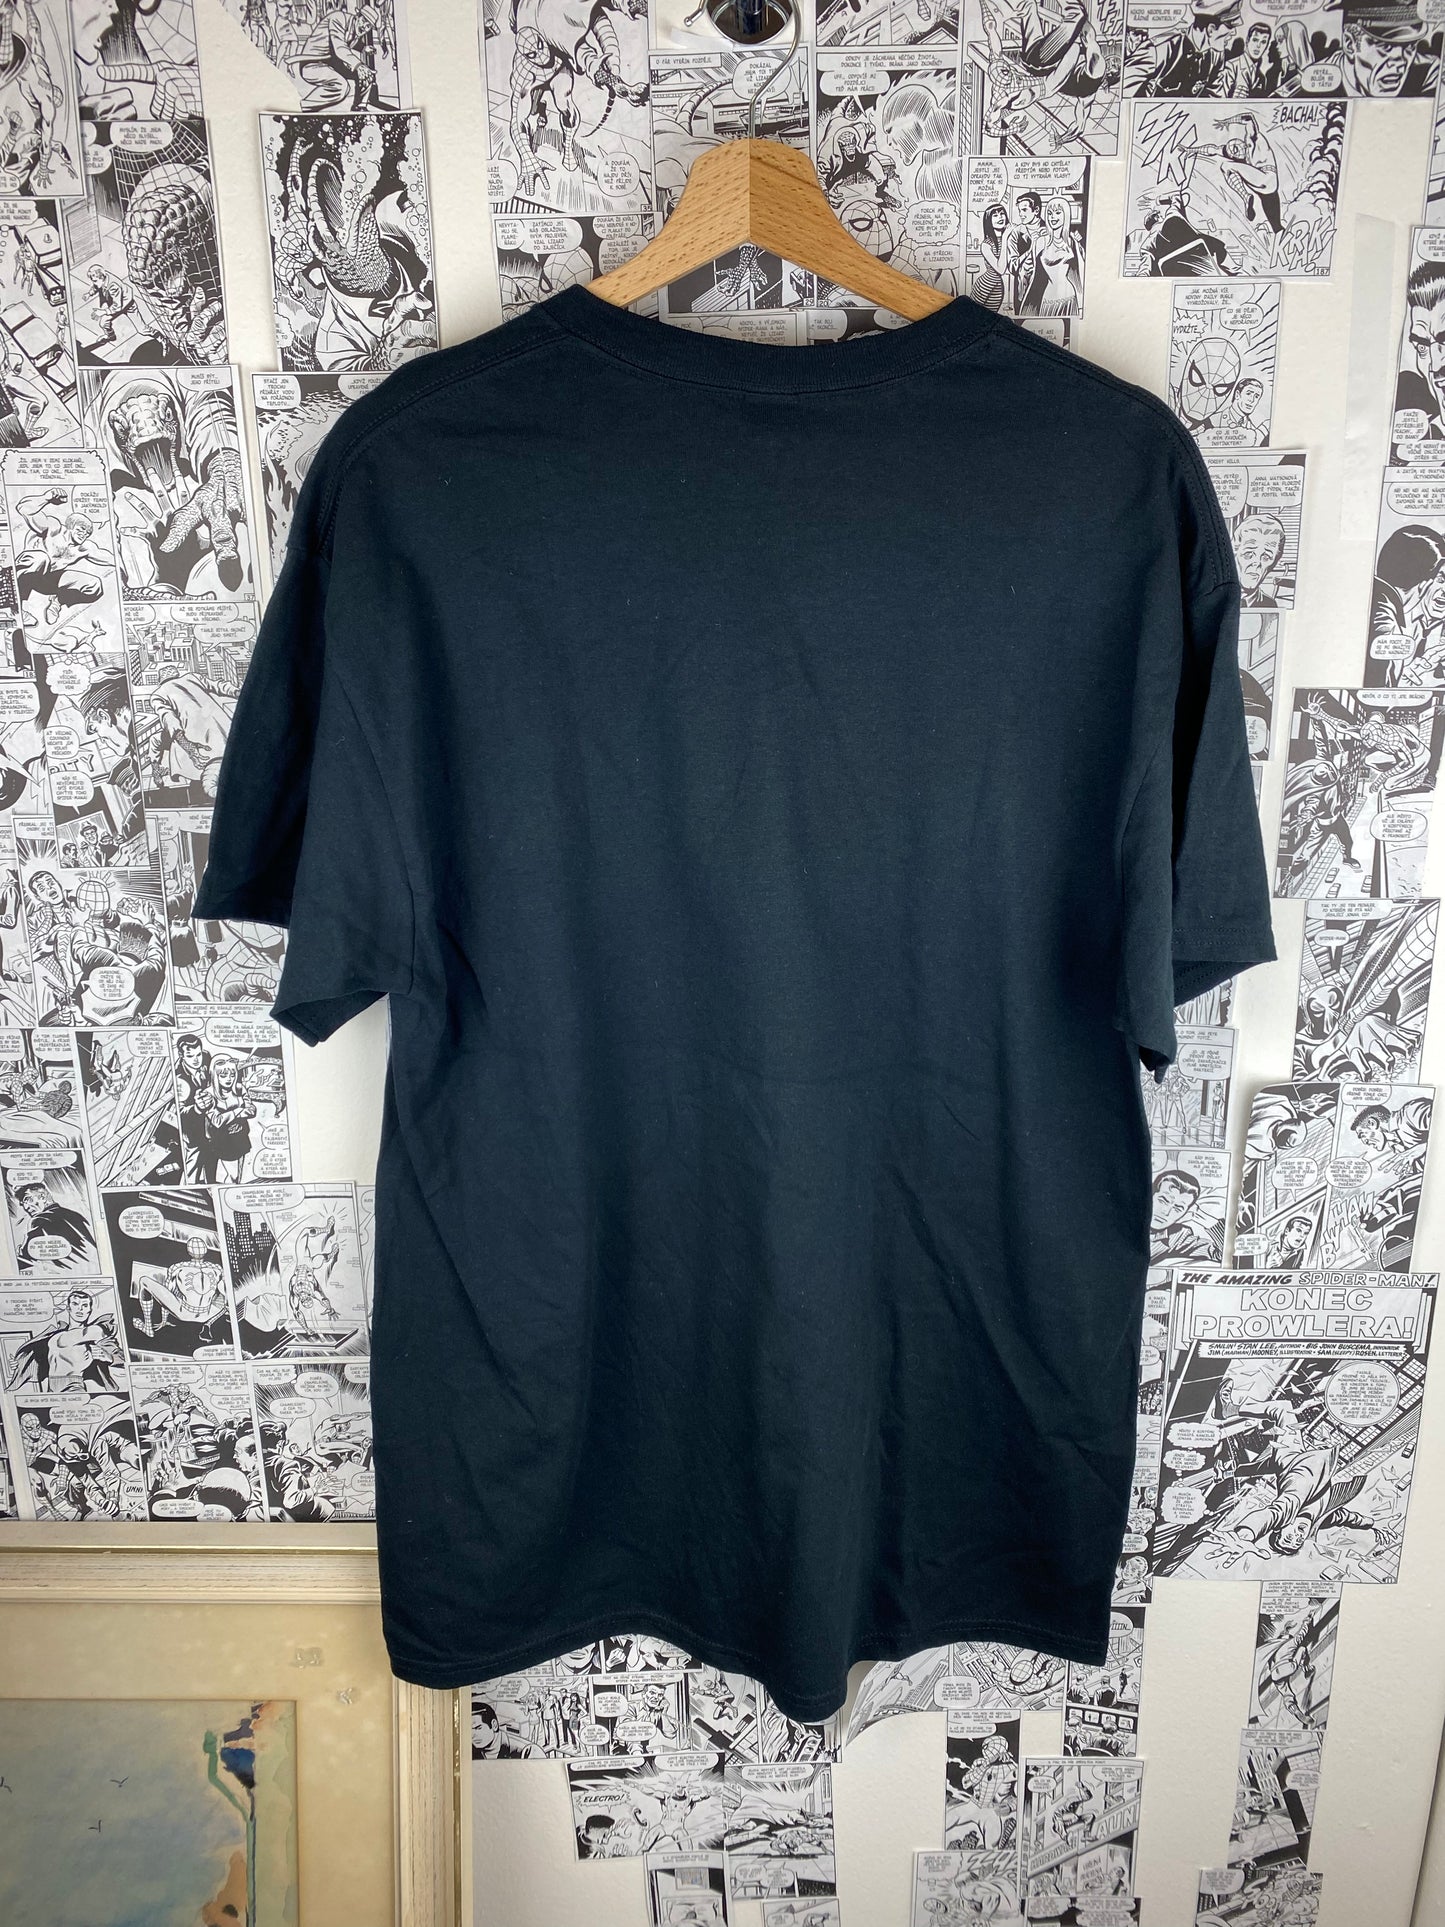 Vintage Judas Priest 00s t-shirt - size L